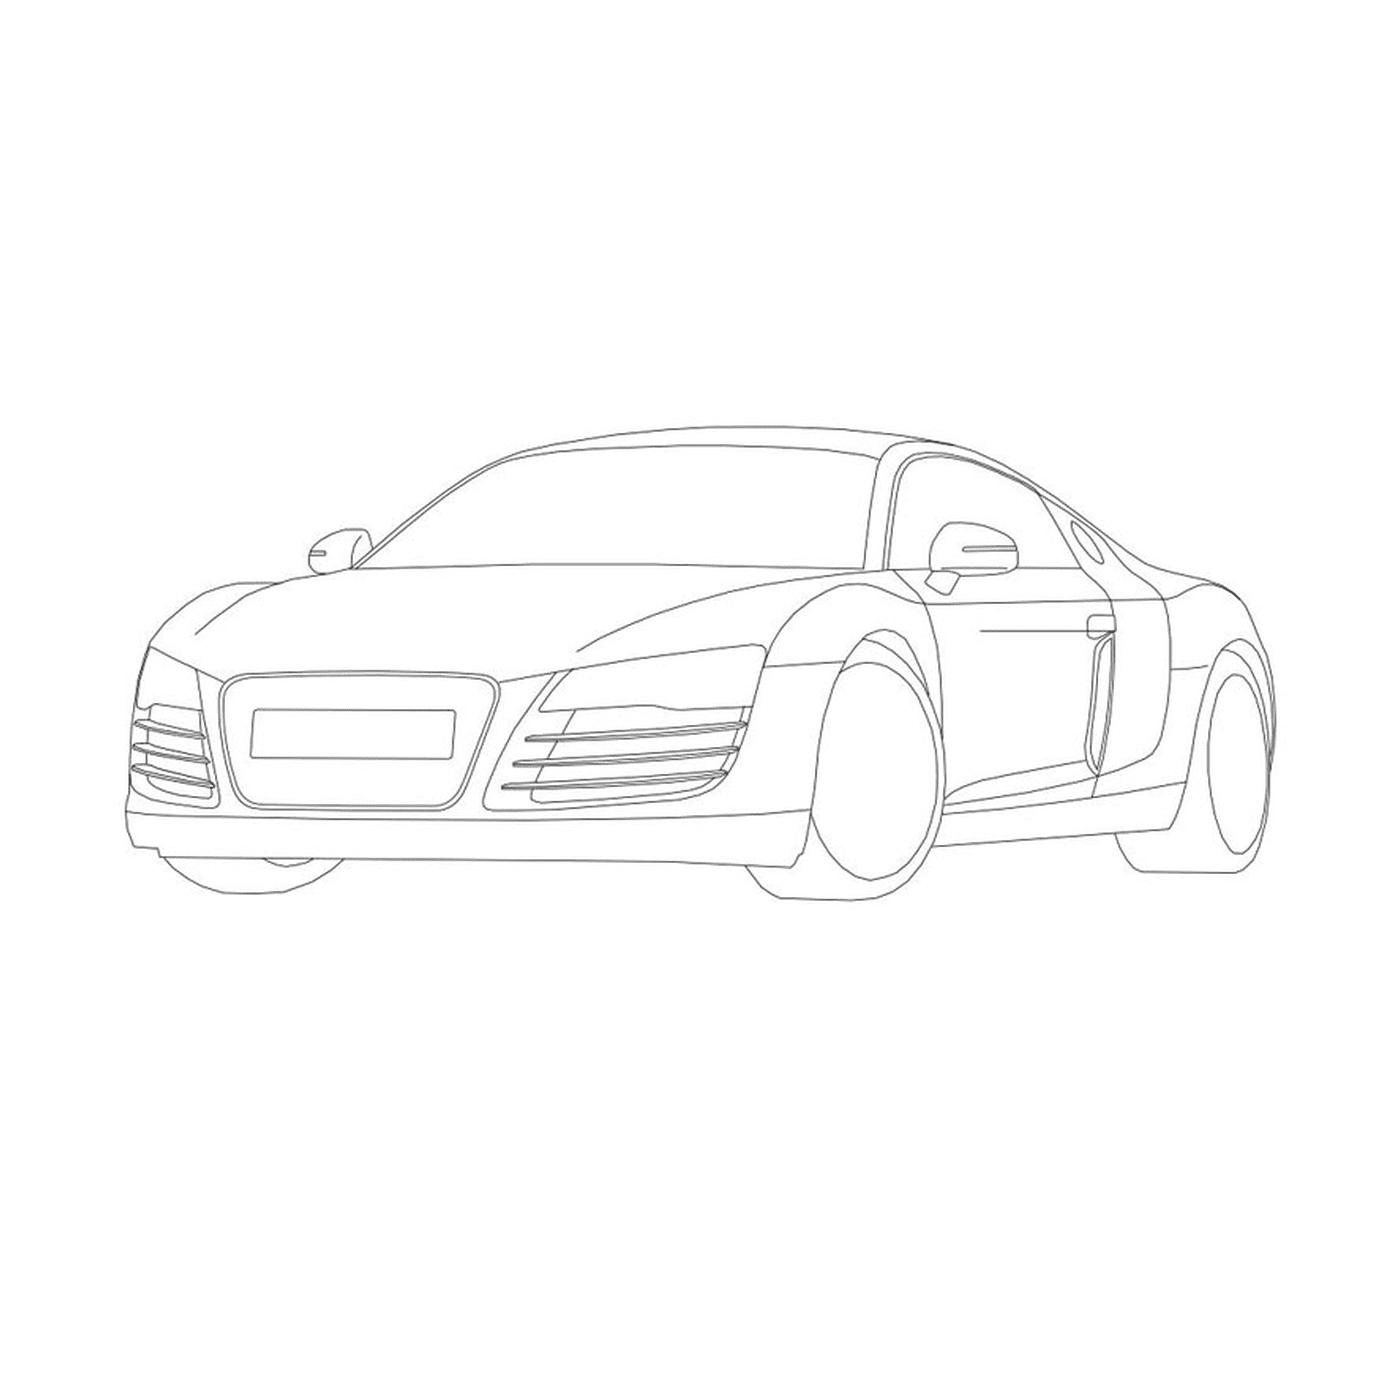  Auto Audi R8 disegnata 